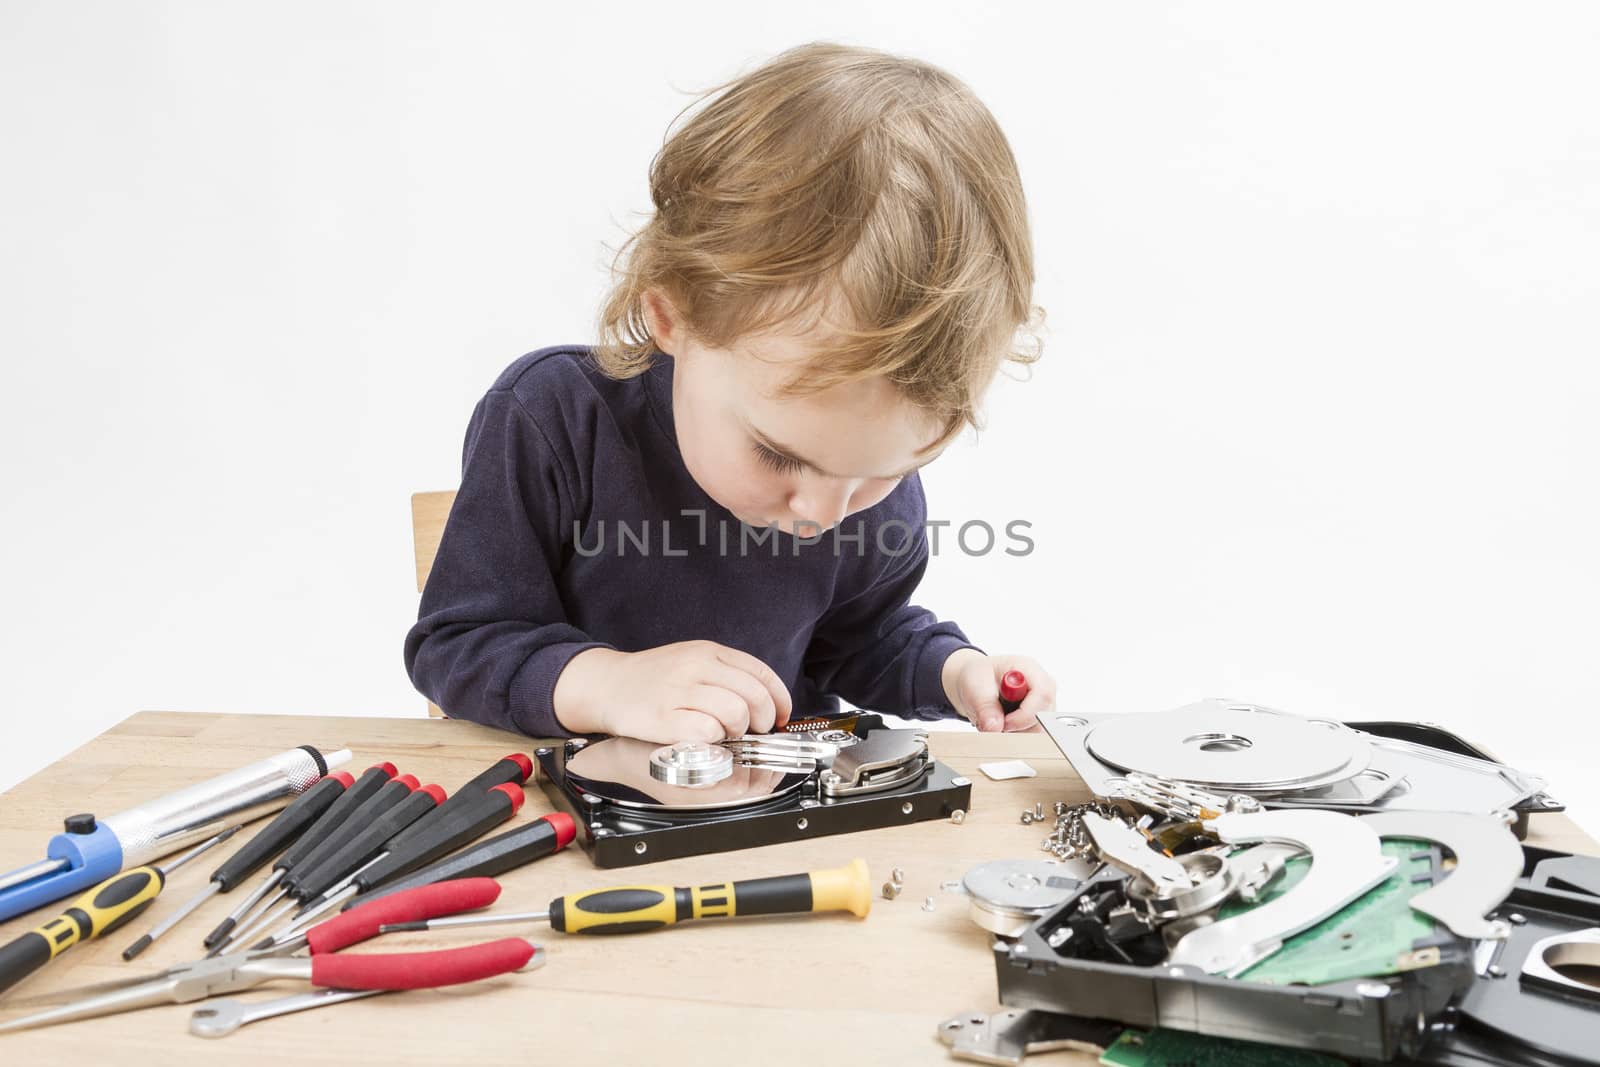 child repairing hard disk drive by gewoldi